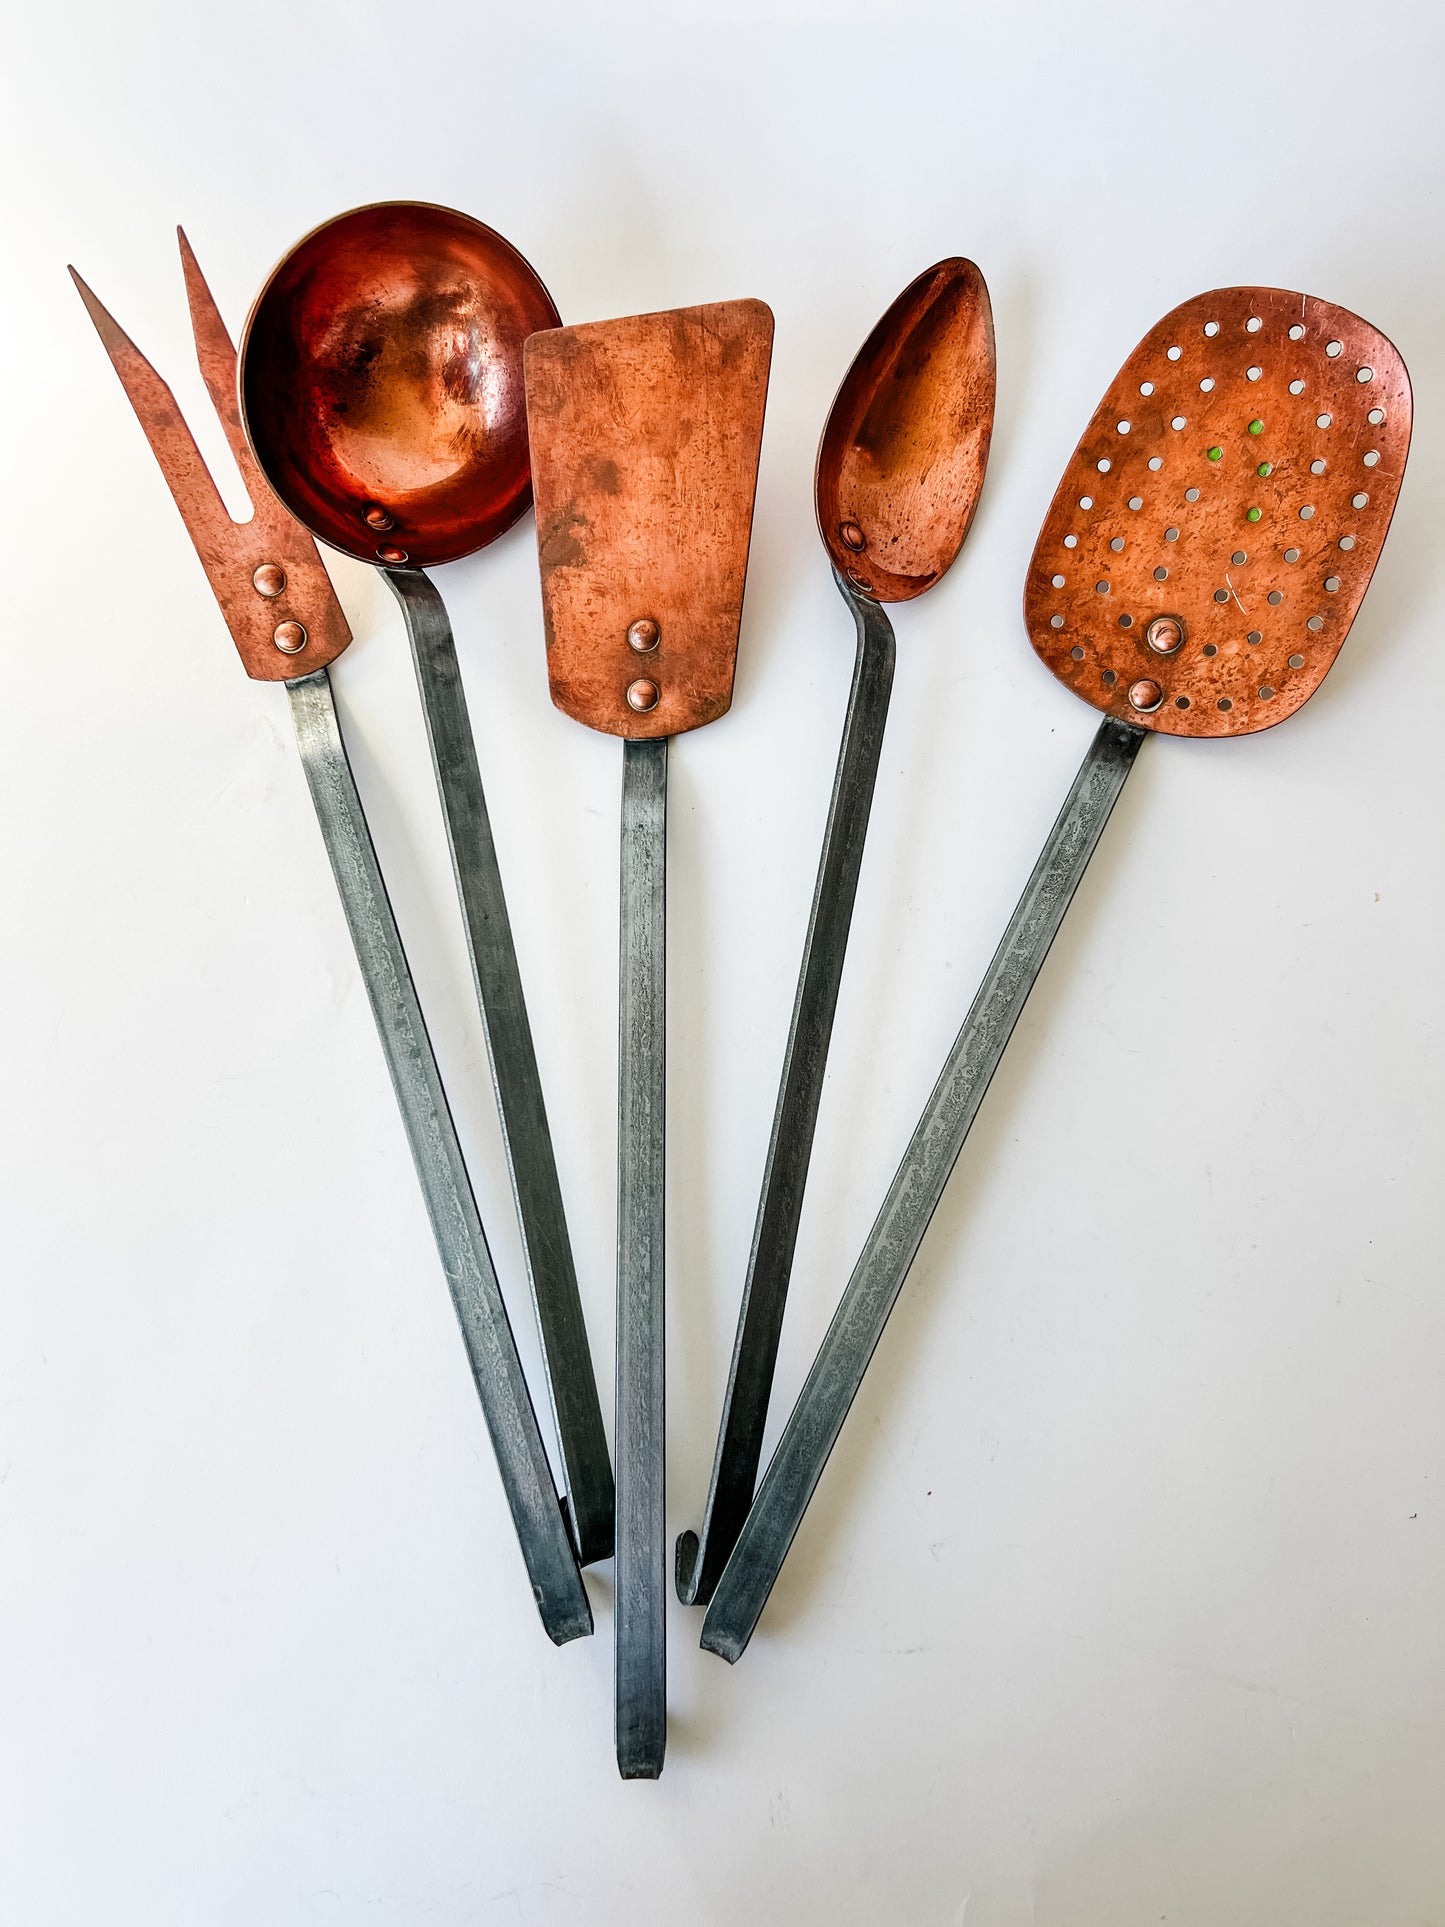 Vintage French XL Copper Utensils - 5 Piece Set